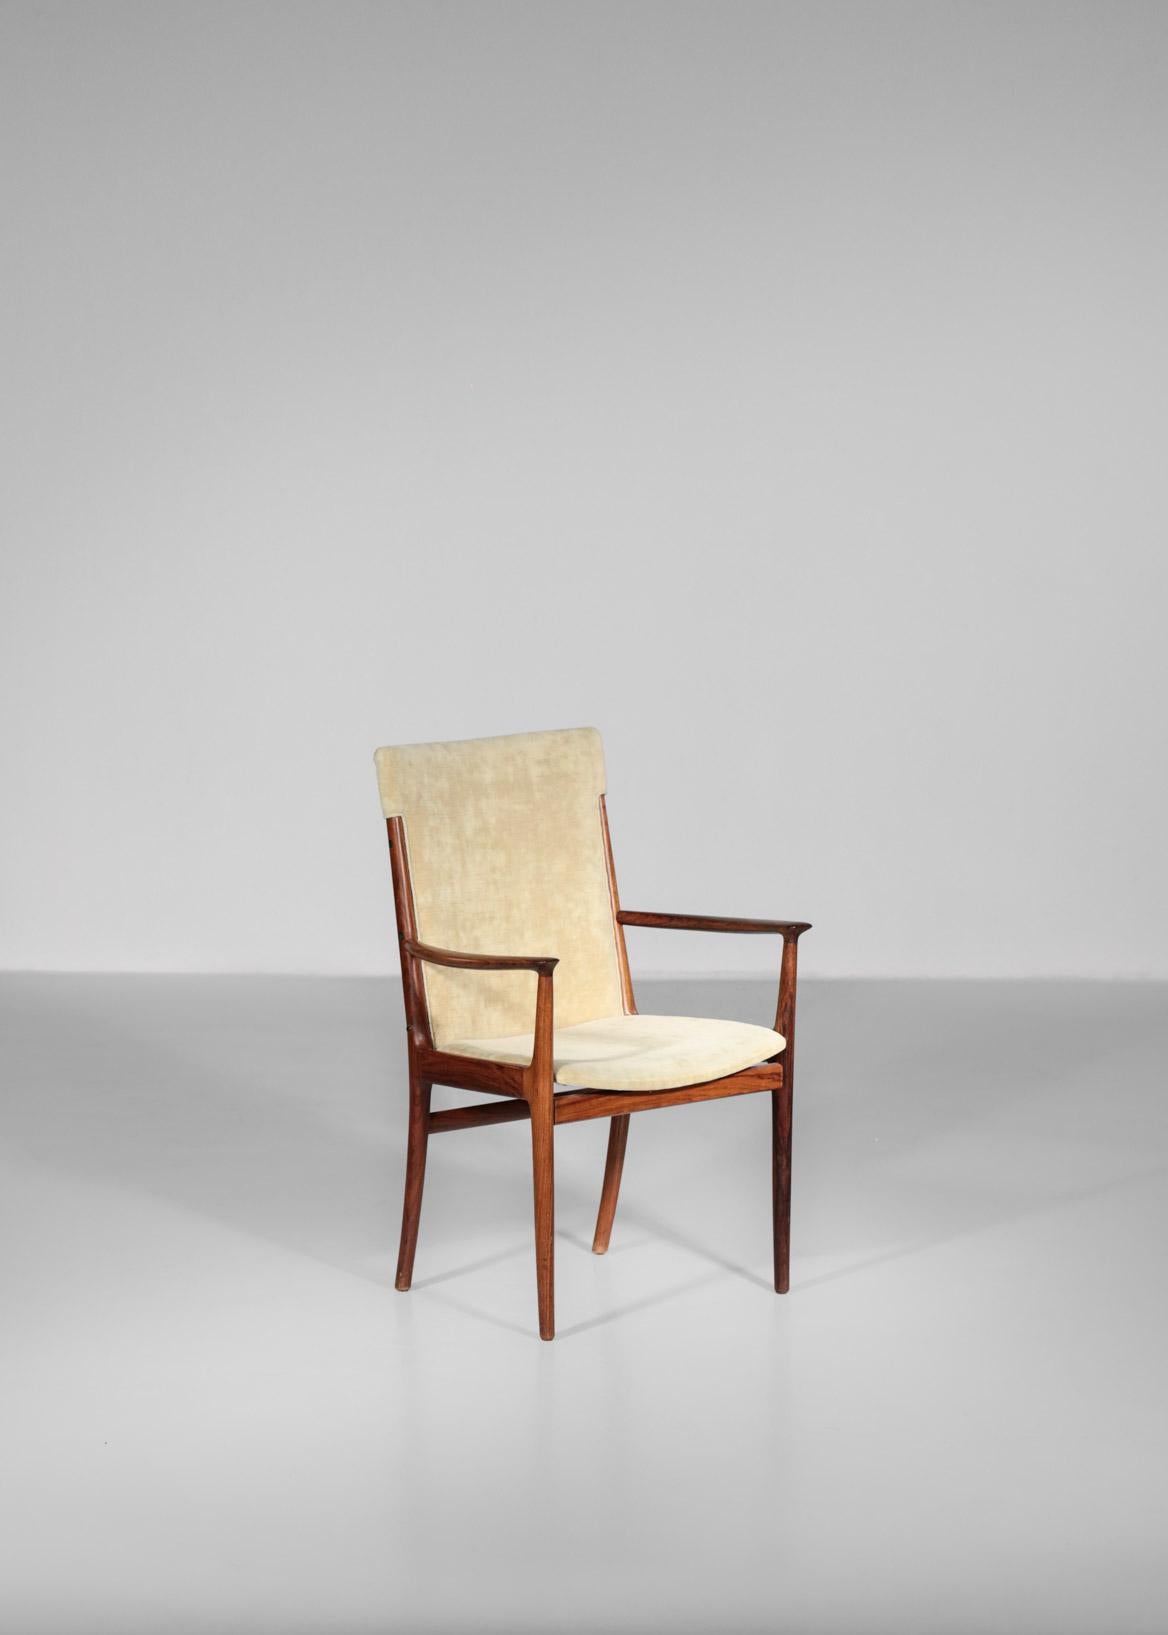 Rare fauteuil danois du designer Harry en bois de rose. Assise en tissu crème. Soren Willadsen Mobelfabrik.